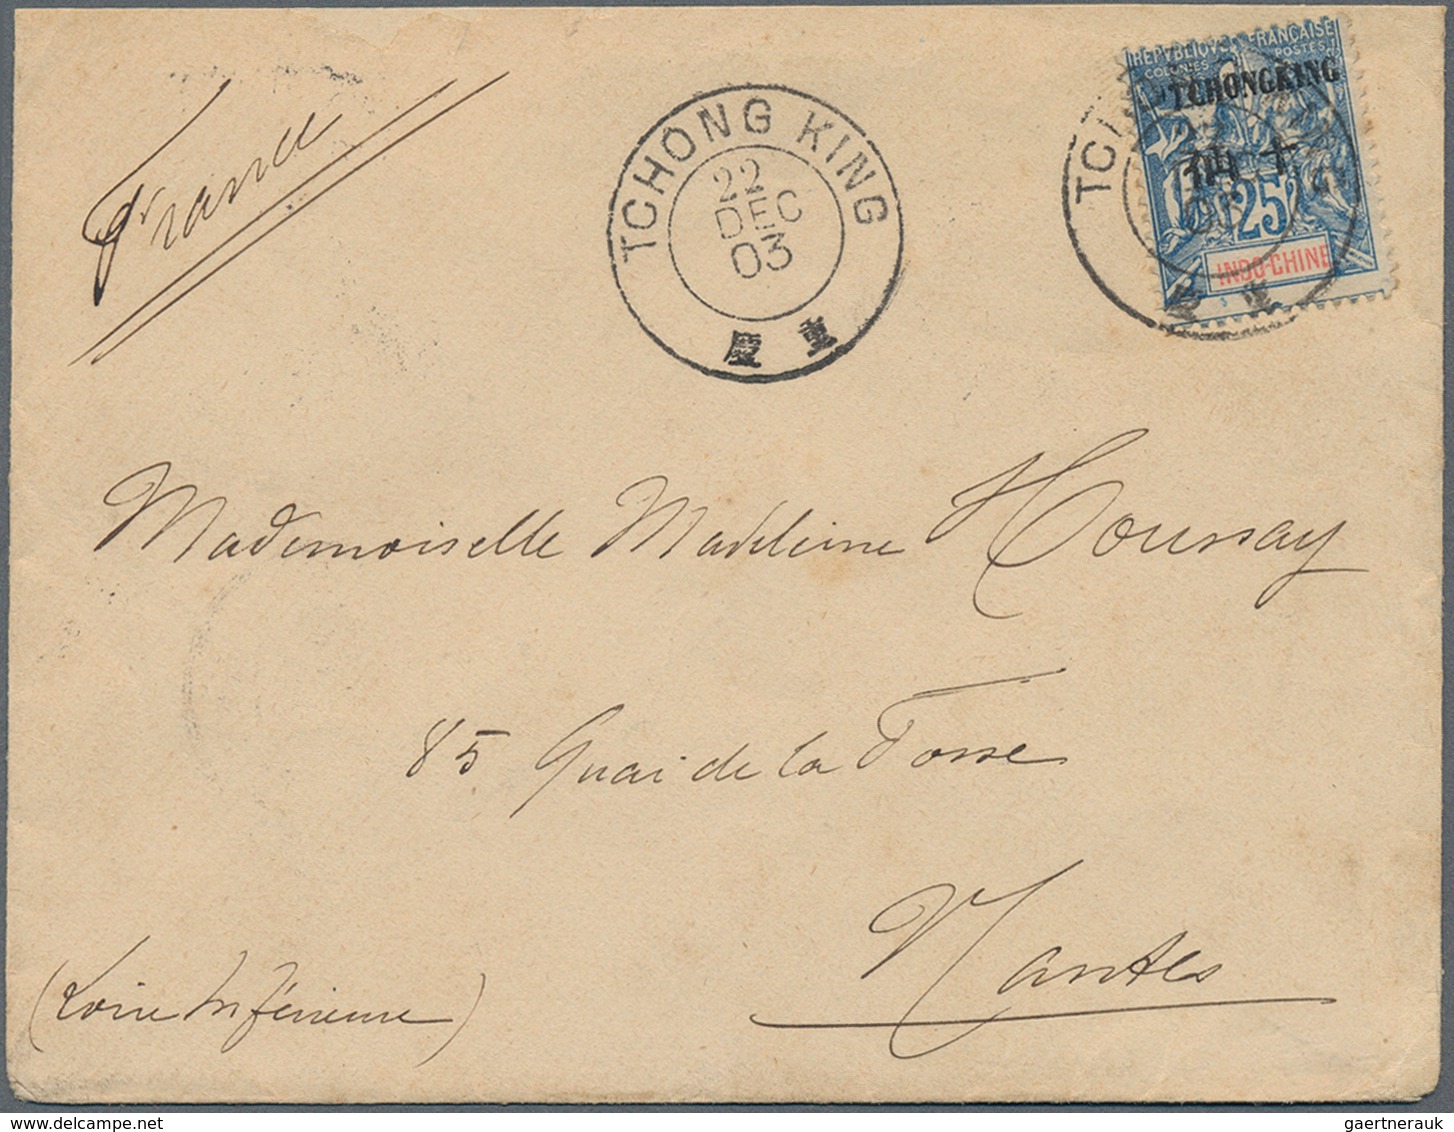 22581 Französisch-Indochina - Postämter in Südchina: 1902/1909, assortment of 32 covers/cards bearing fran